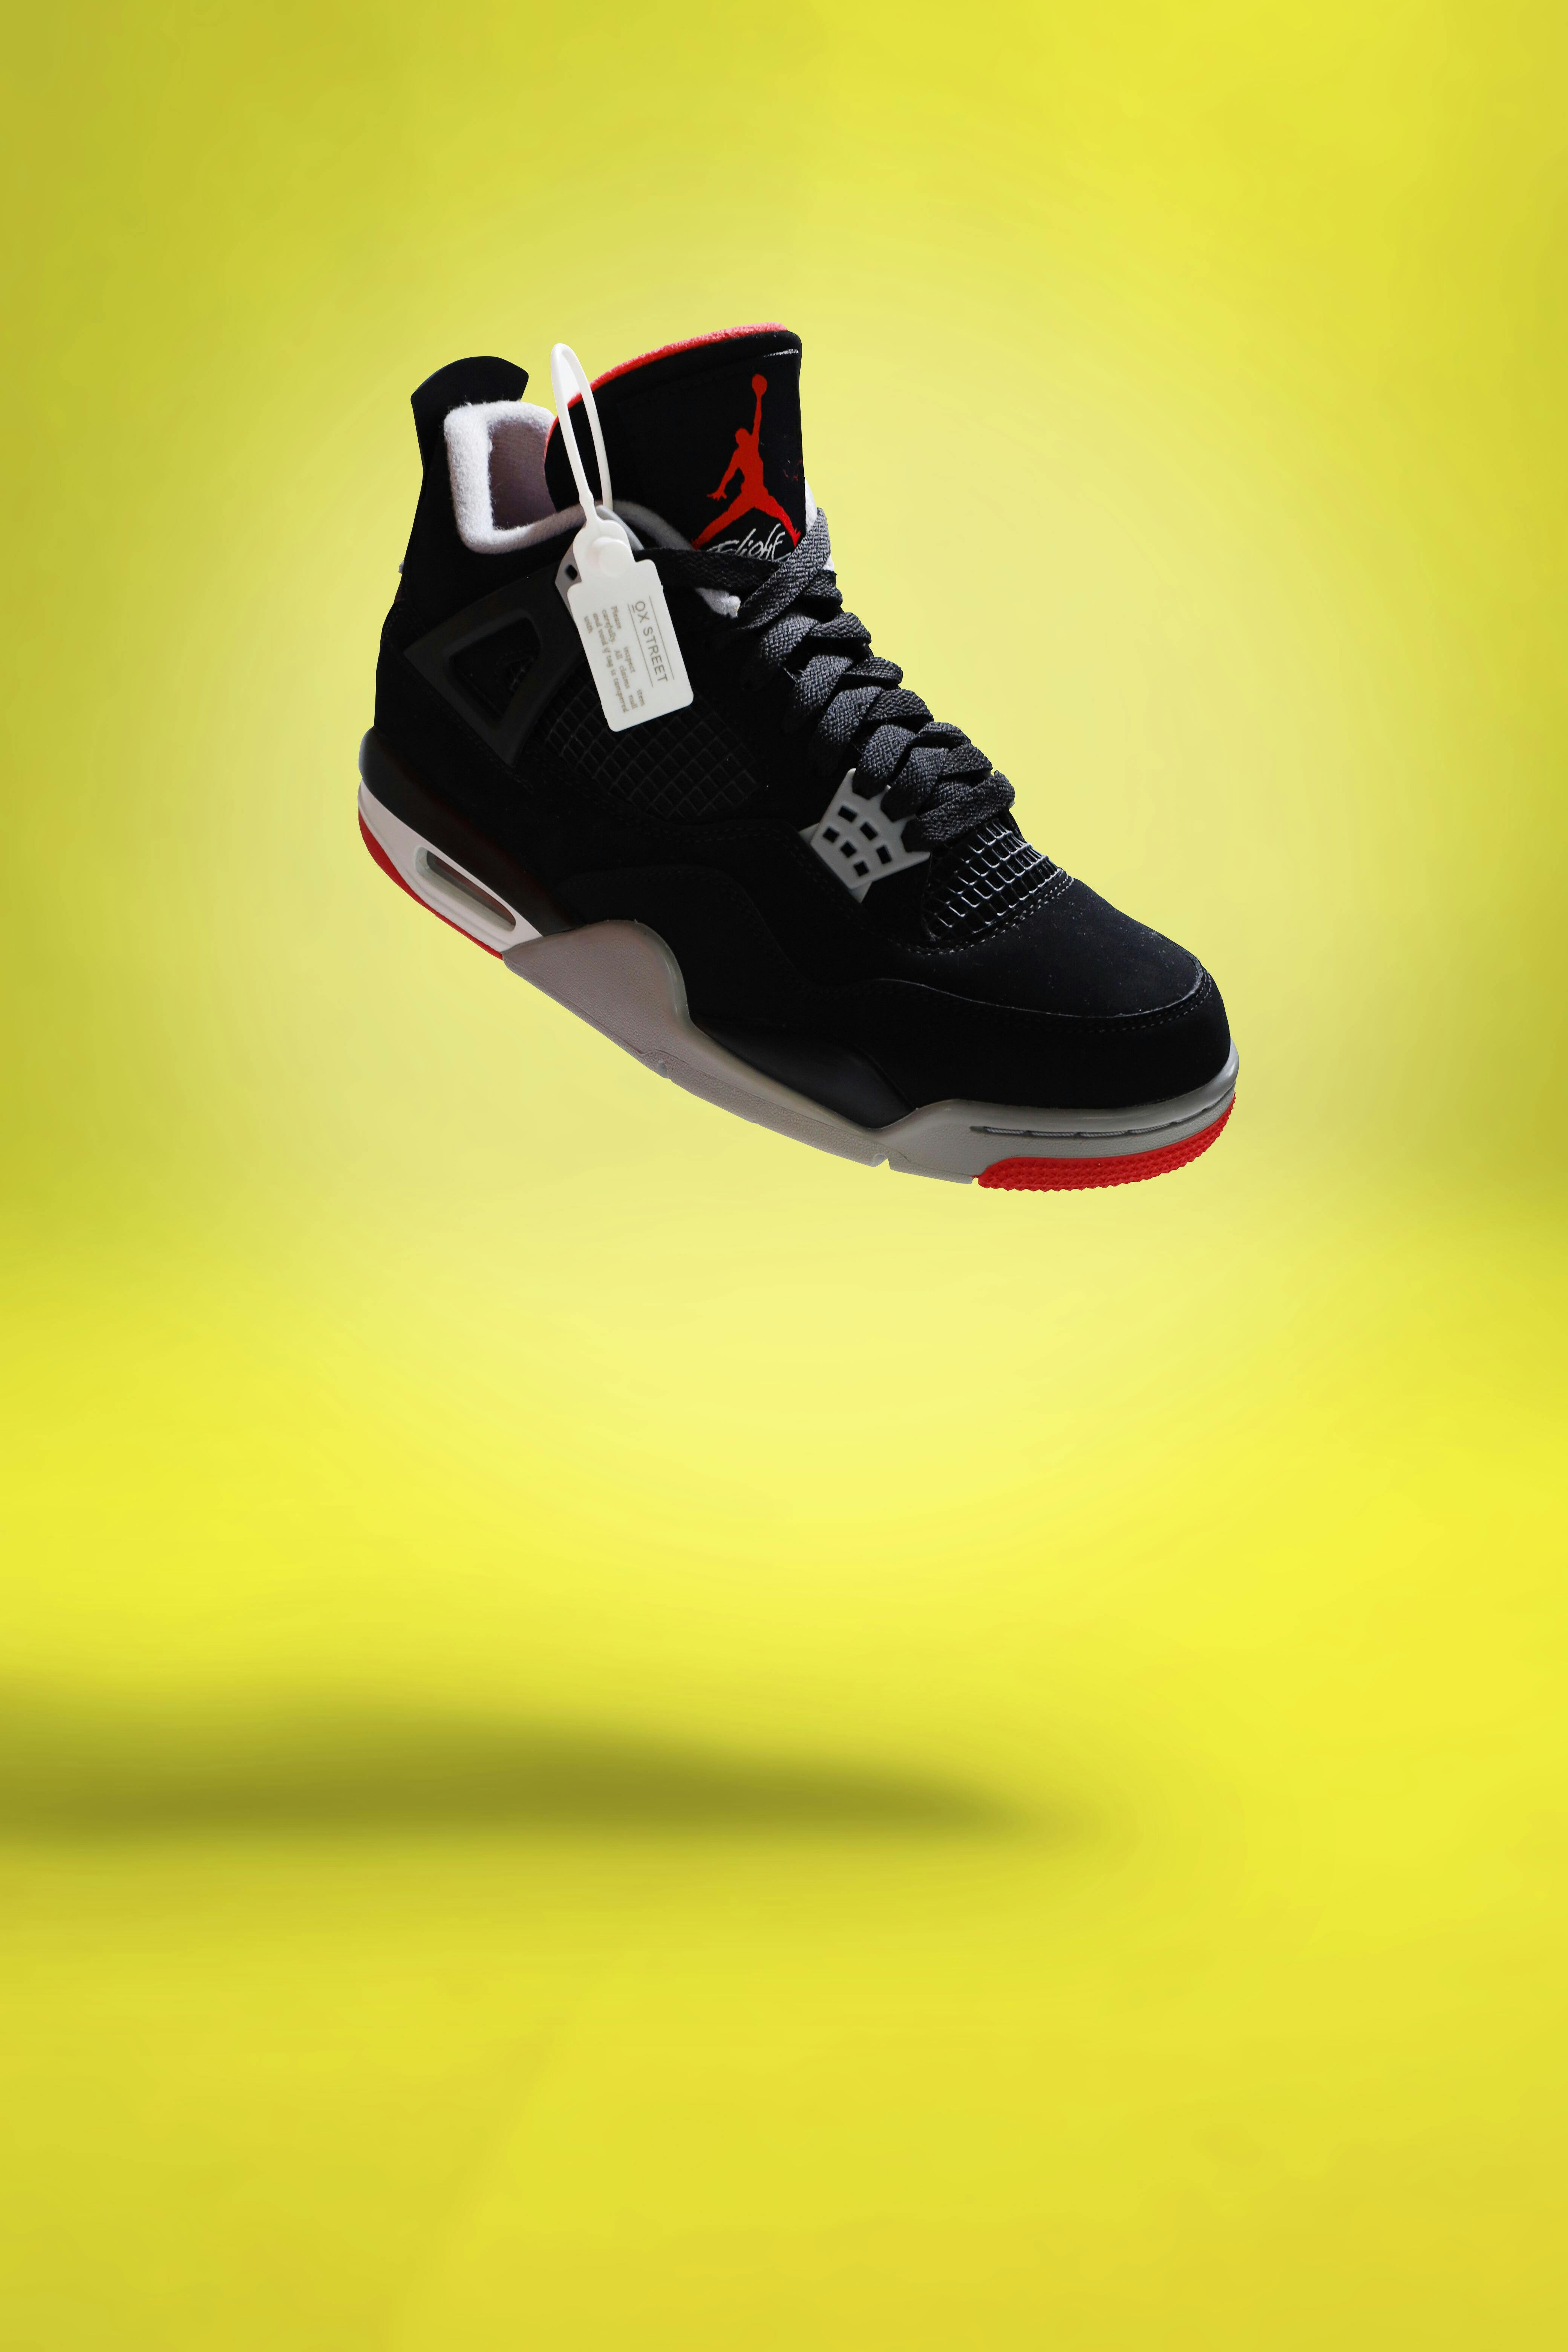 Jordan Shoes Photos, Download The BEST Free Jordan Shoes Stock Photos & HD  Images